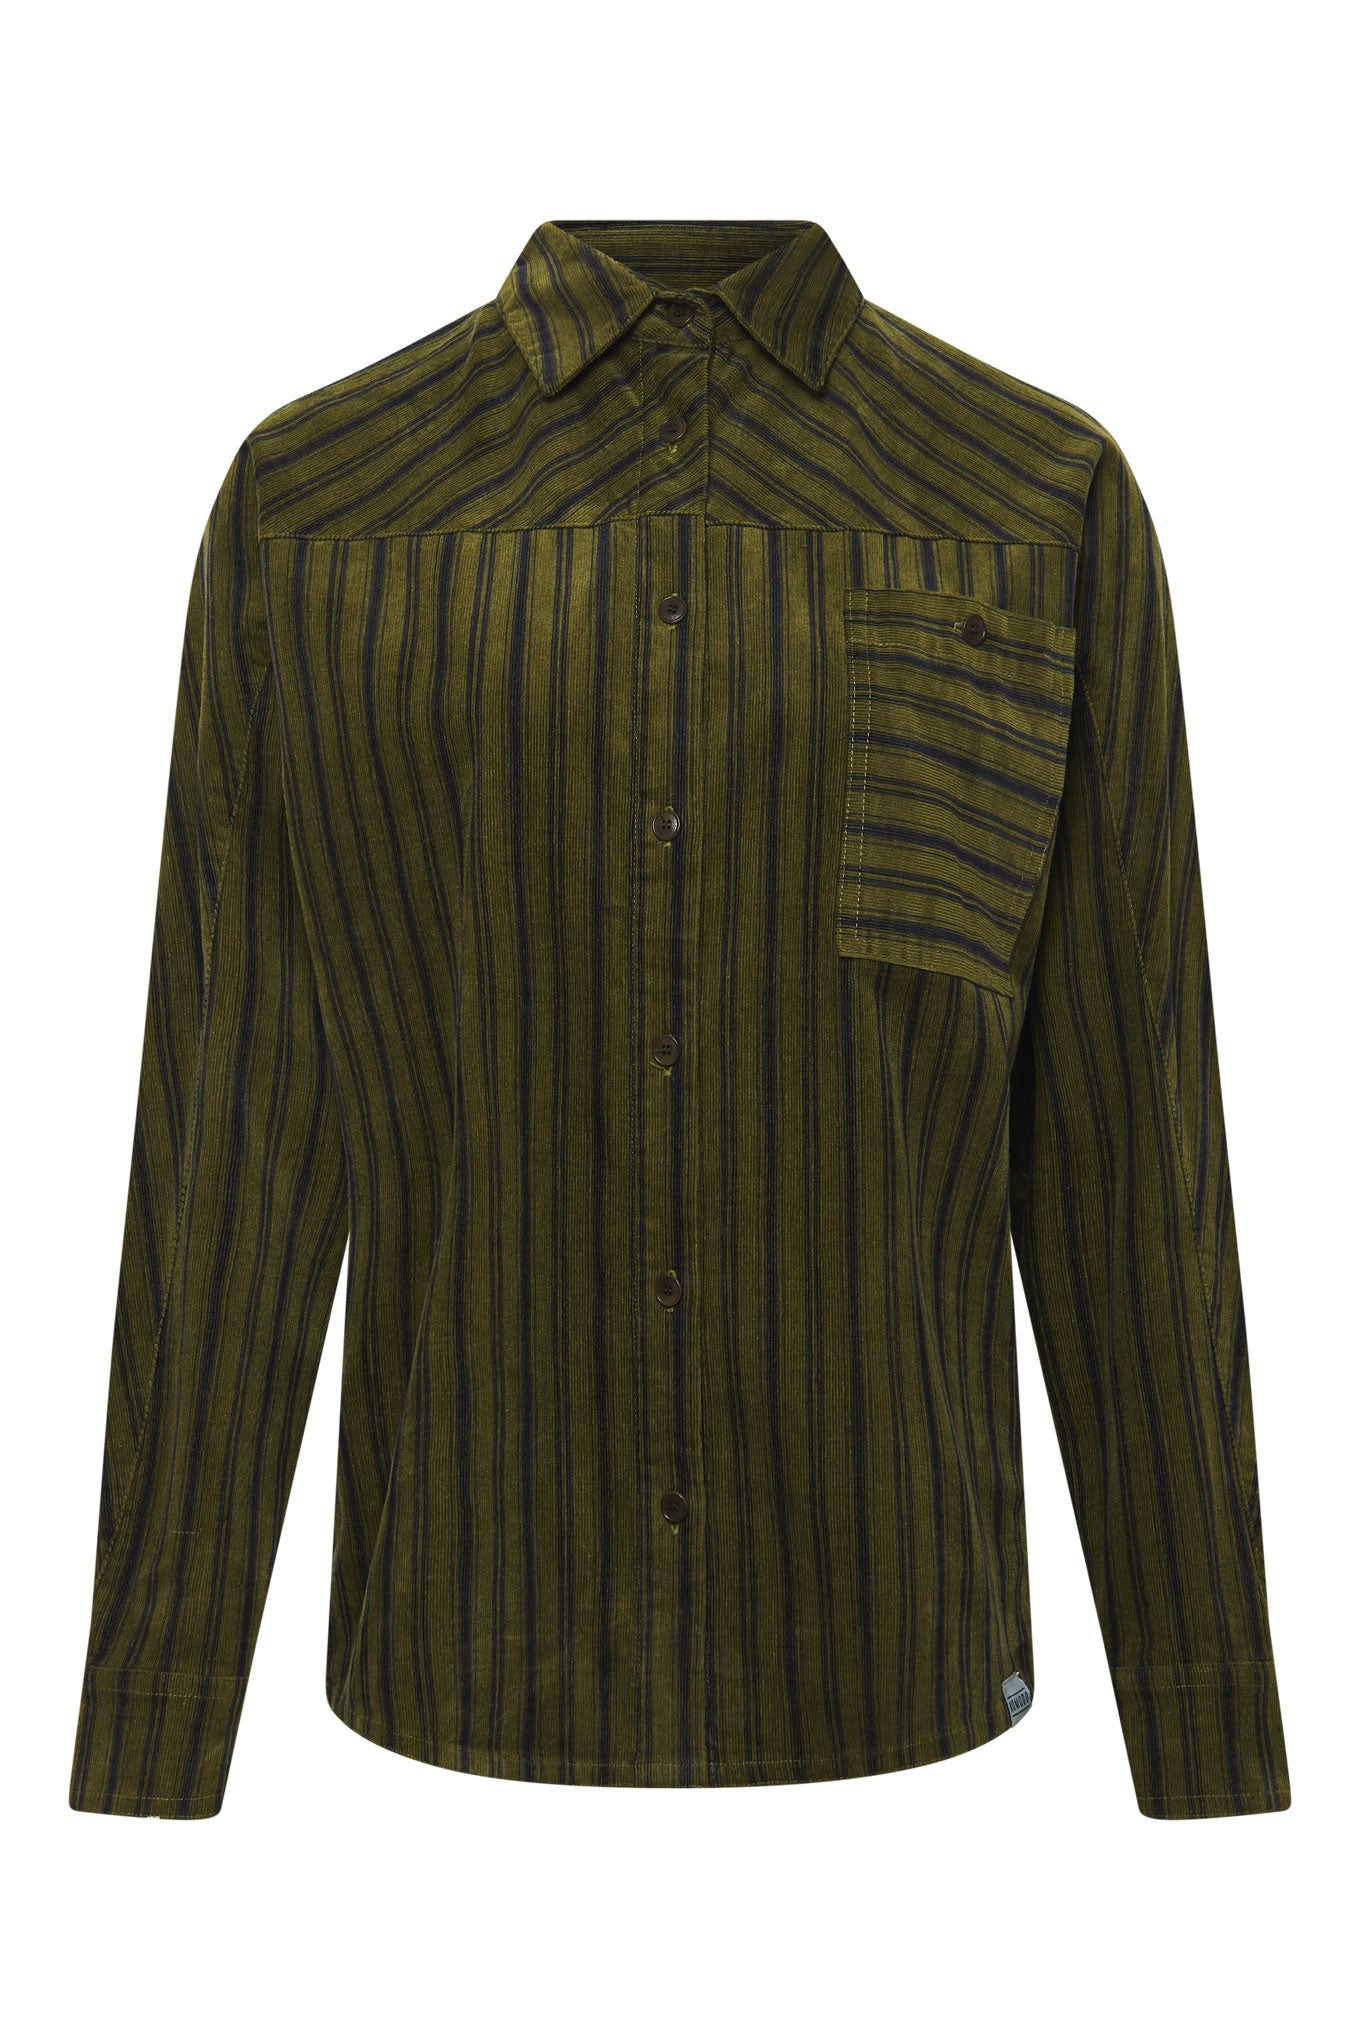 Dark green, long-sleeved corduroy shirt STELLA made of organic cotton from Komodo